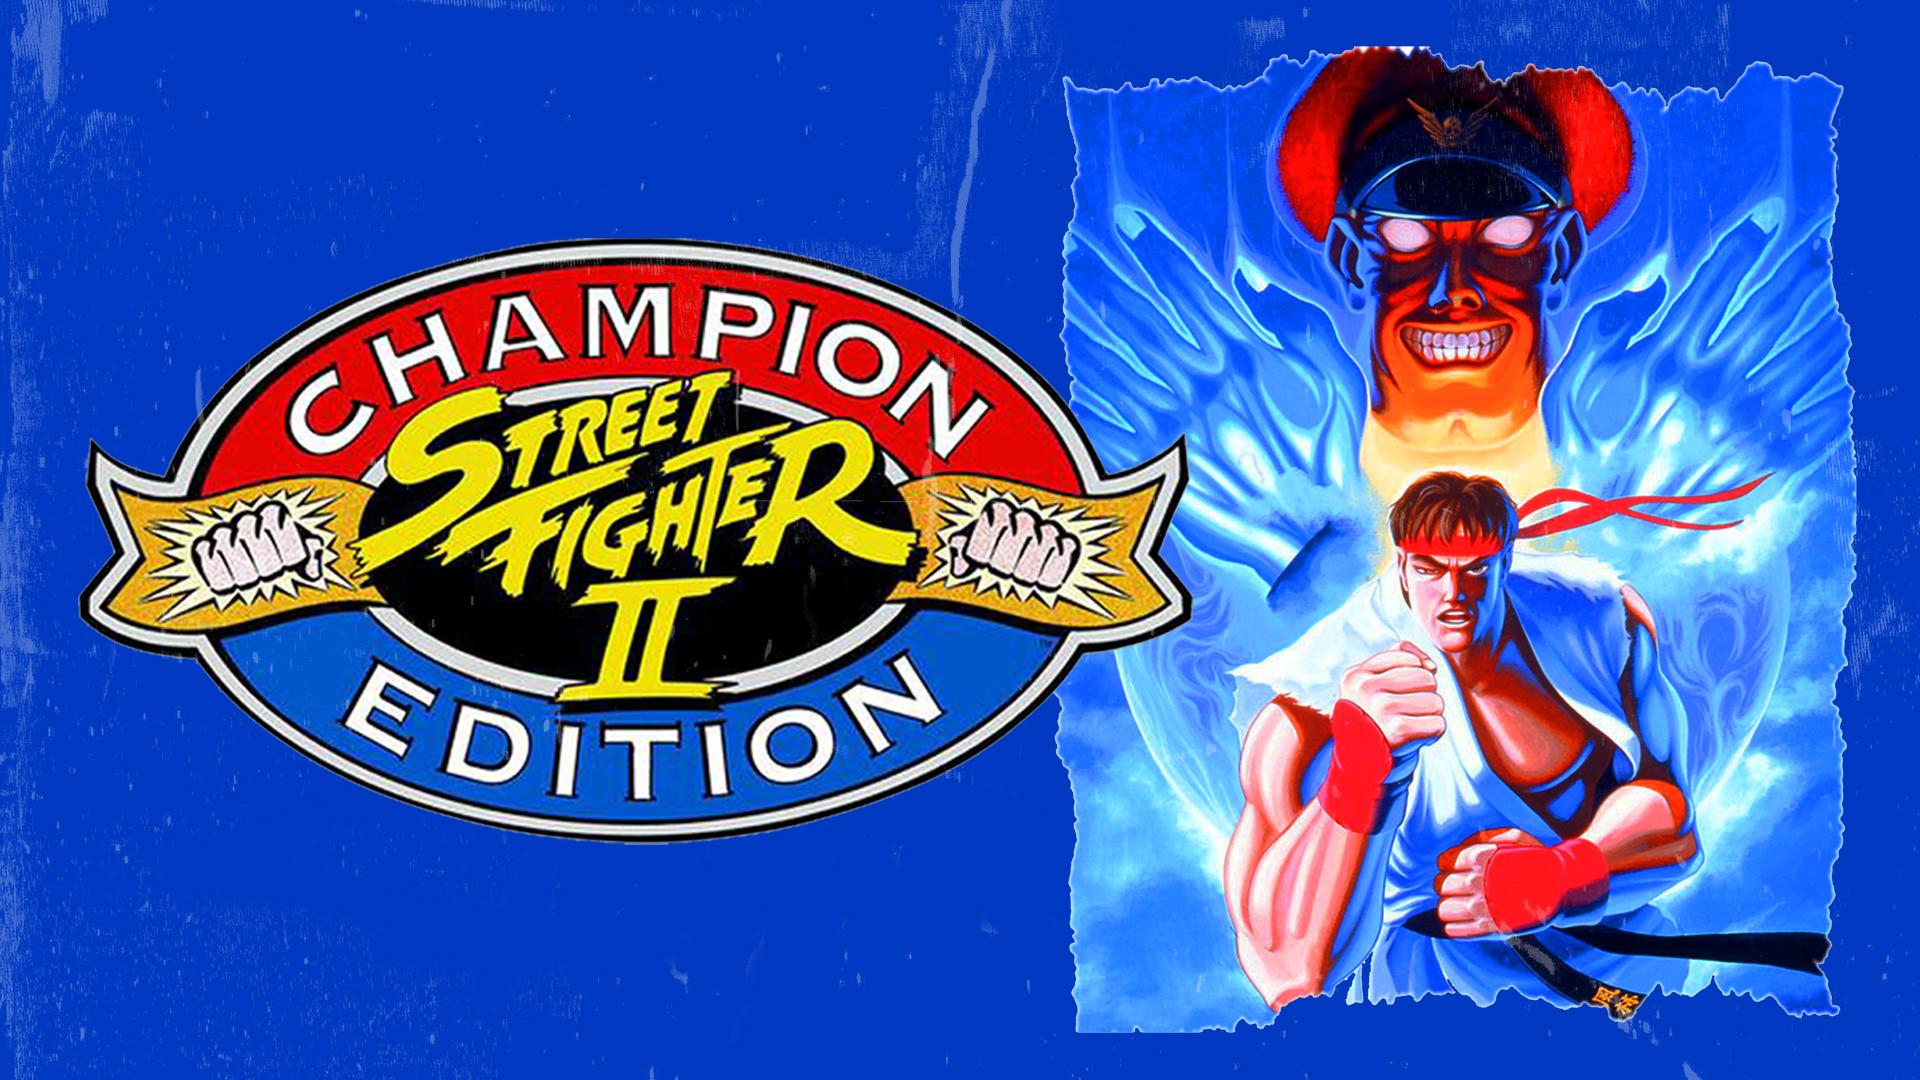 Street 2 Champion Edition: The Arcade Tournament - 16 FEB 2020